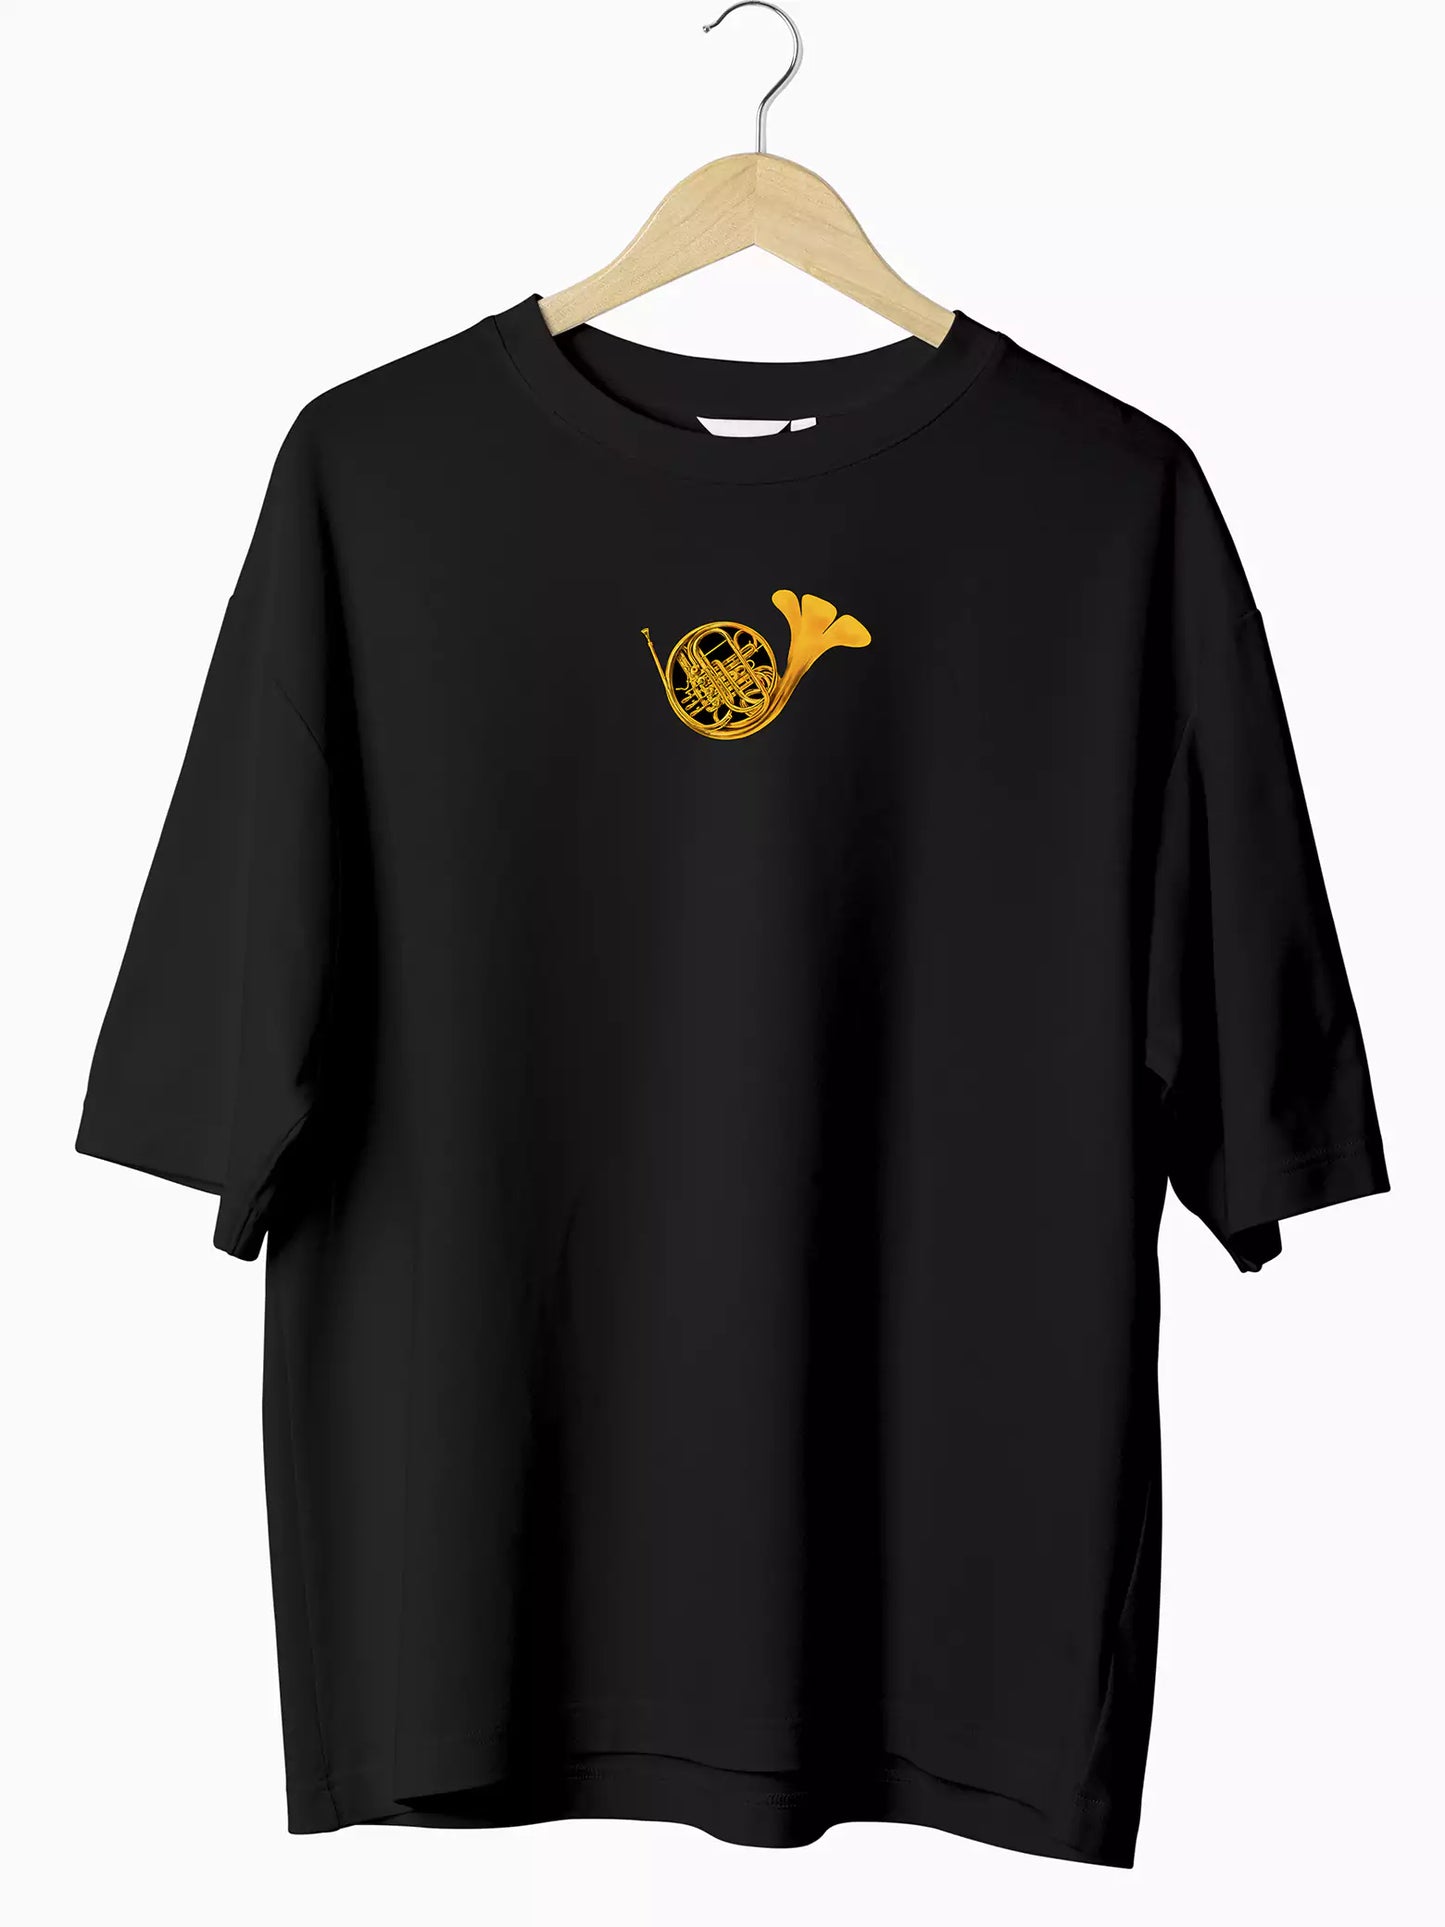 Buy Golden Trumpet Oversized  Drop-Shoulder T-Shirt